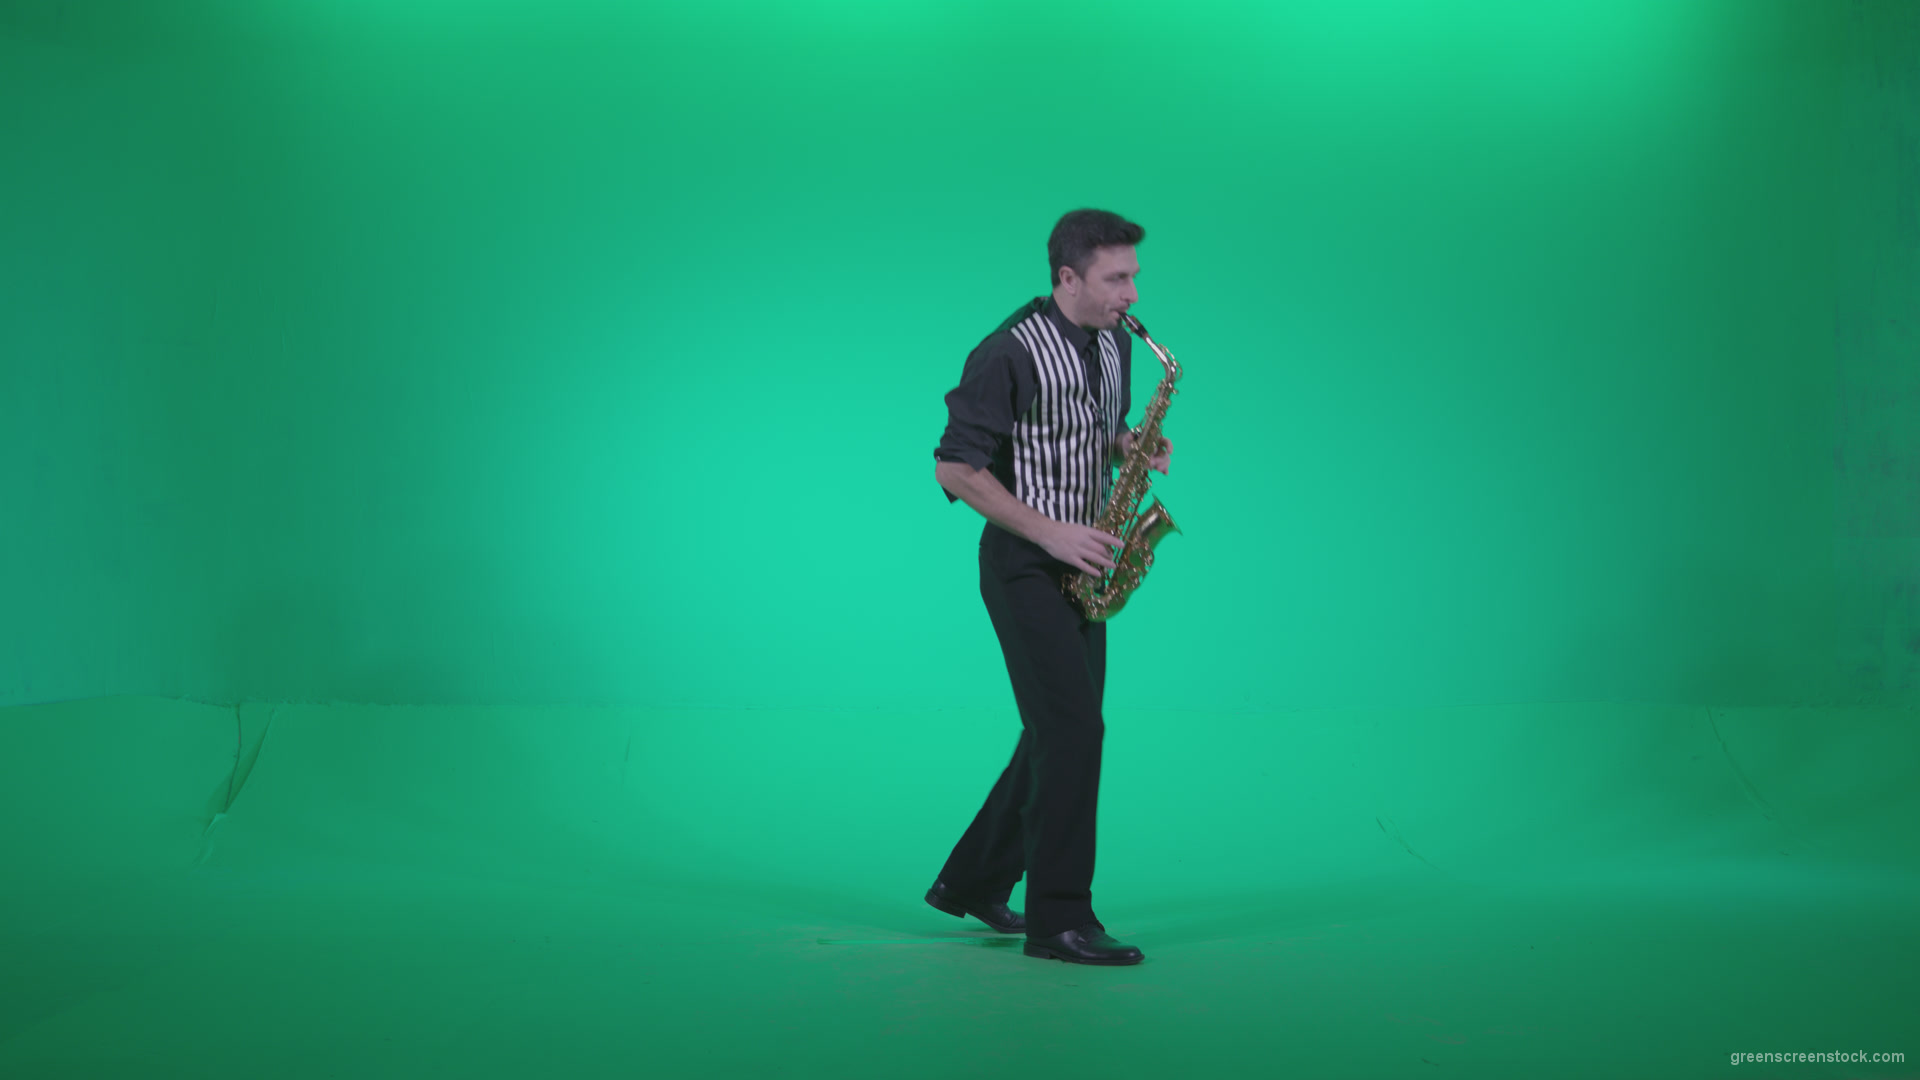 Saxophone-Virtuoso-Performer-s9-Green-Screen-Video-Footage_001 Green Screen Stock